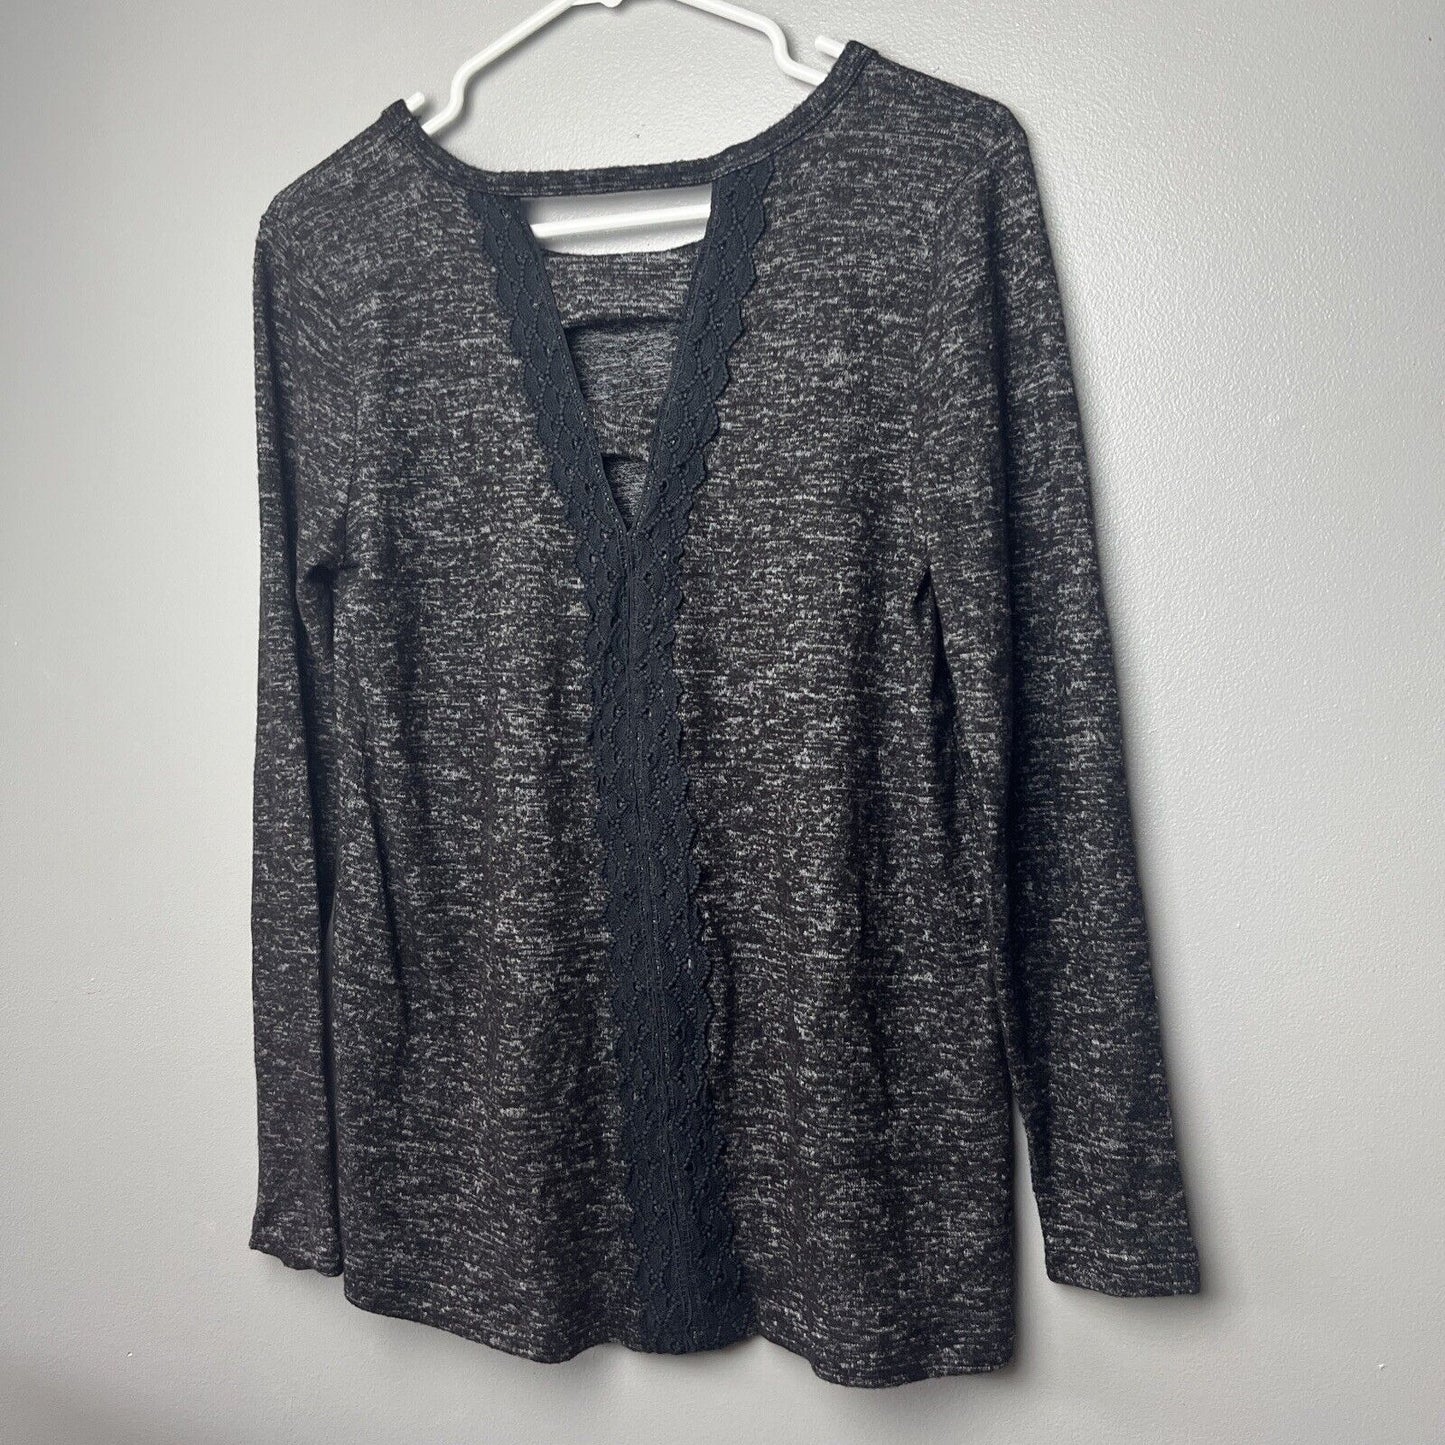 Bobeau Hacci Knit Top Size S Grey Criss Cross Back Lace Trim NWT